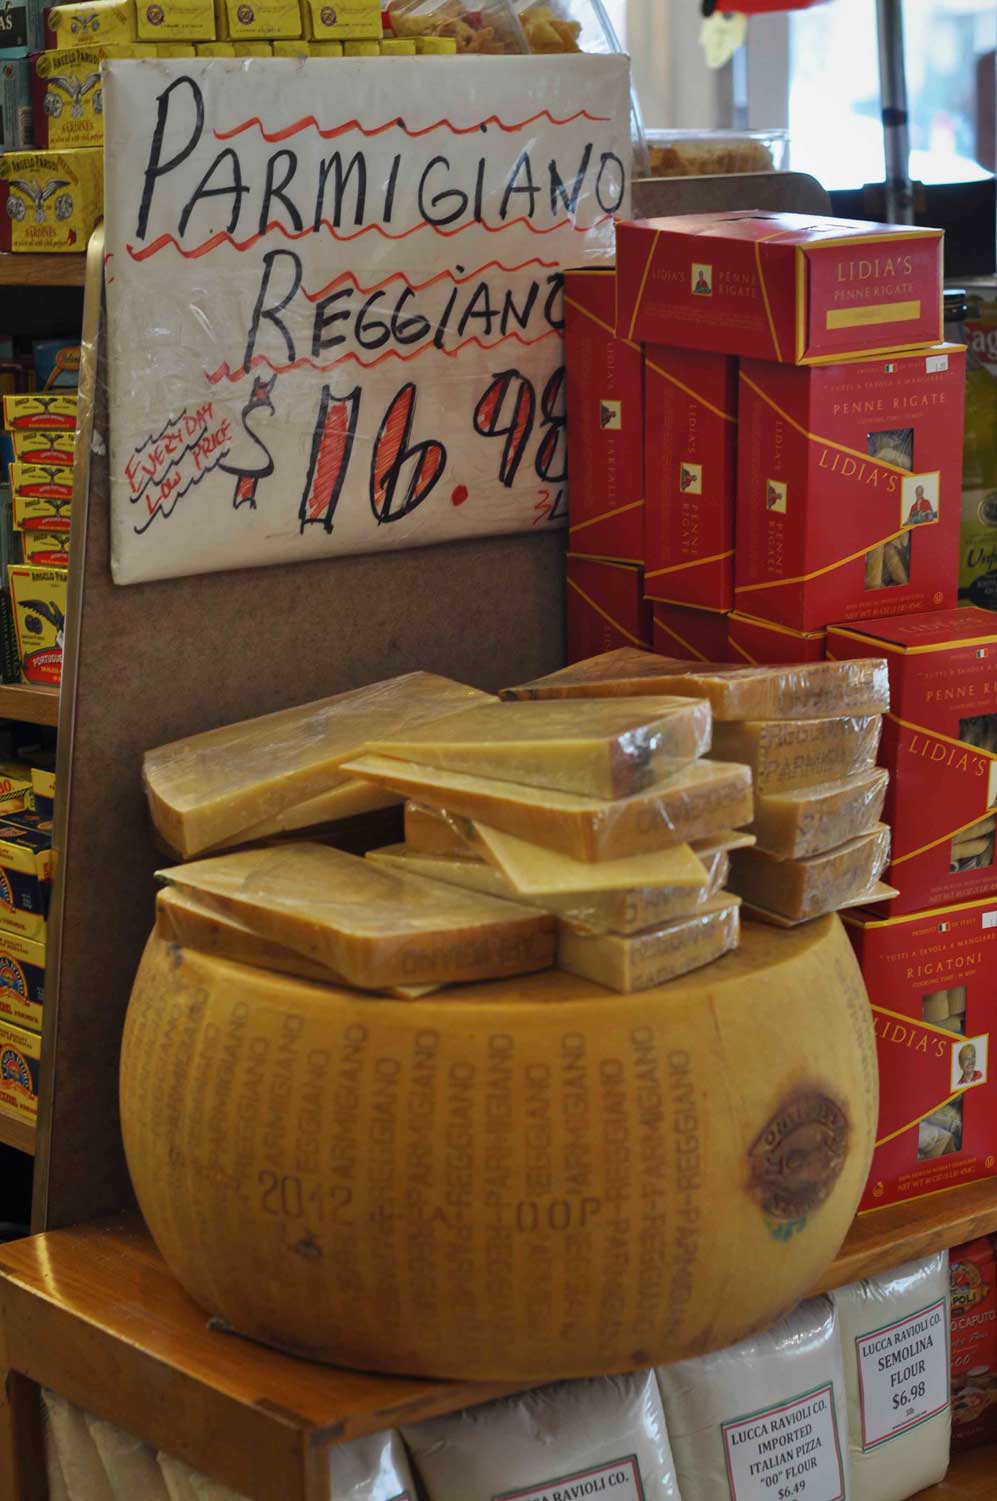 Giant wheel of parmesan cheese — parmigiano reggiano